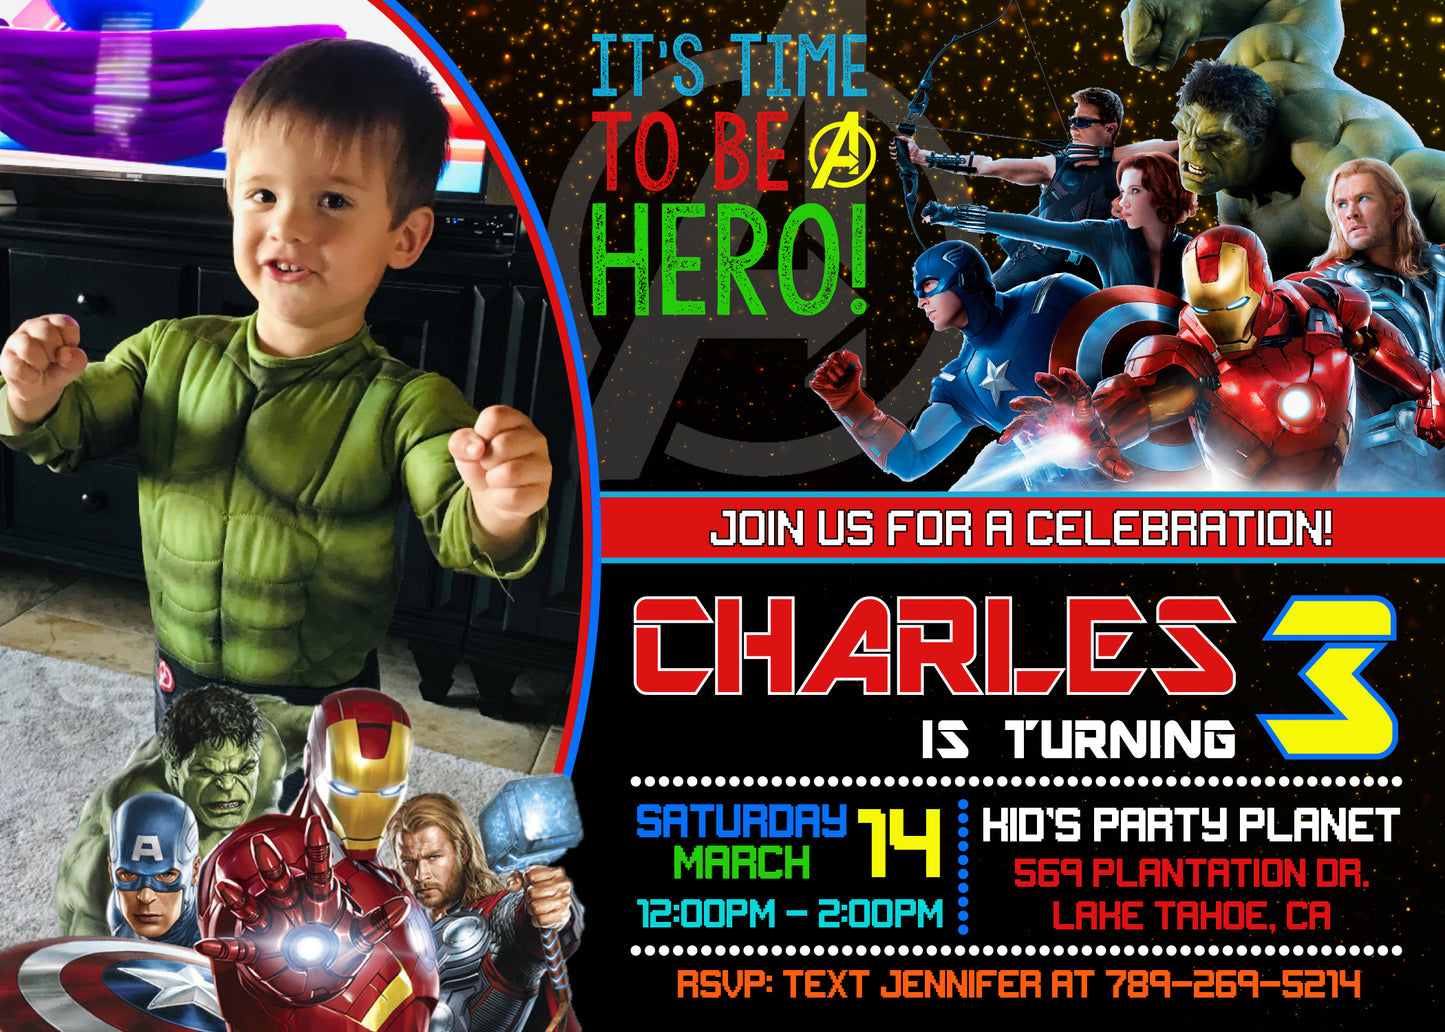 AVENGERS Birthday Party Invitation with Photo - Printed or Digital! Iron Man, Hulk, Captain America!